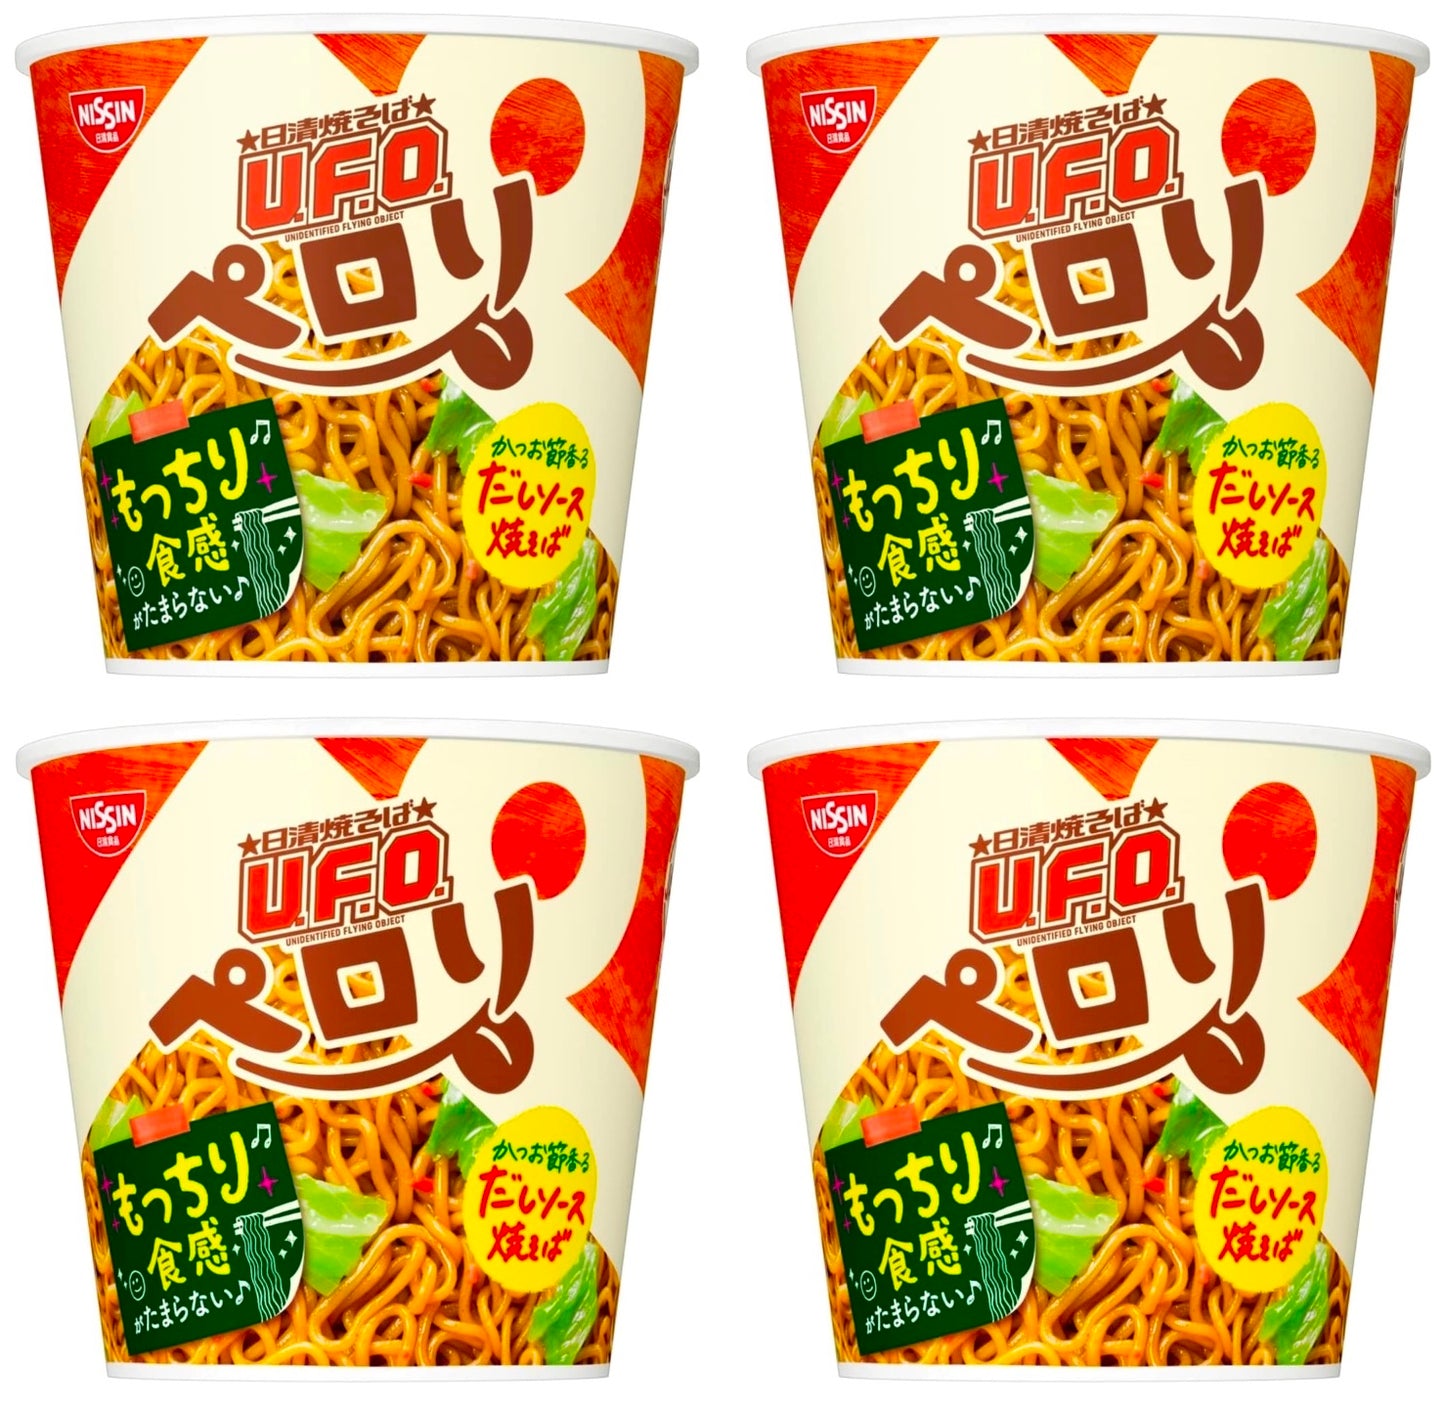 NISSIN Noodles YAKISOBA UFO Chow Mein Ramen Stir Fried Sauce Cup Japanese 74g